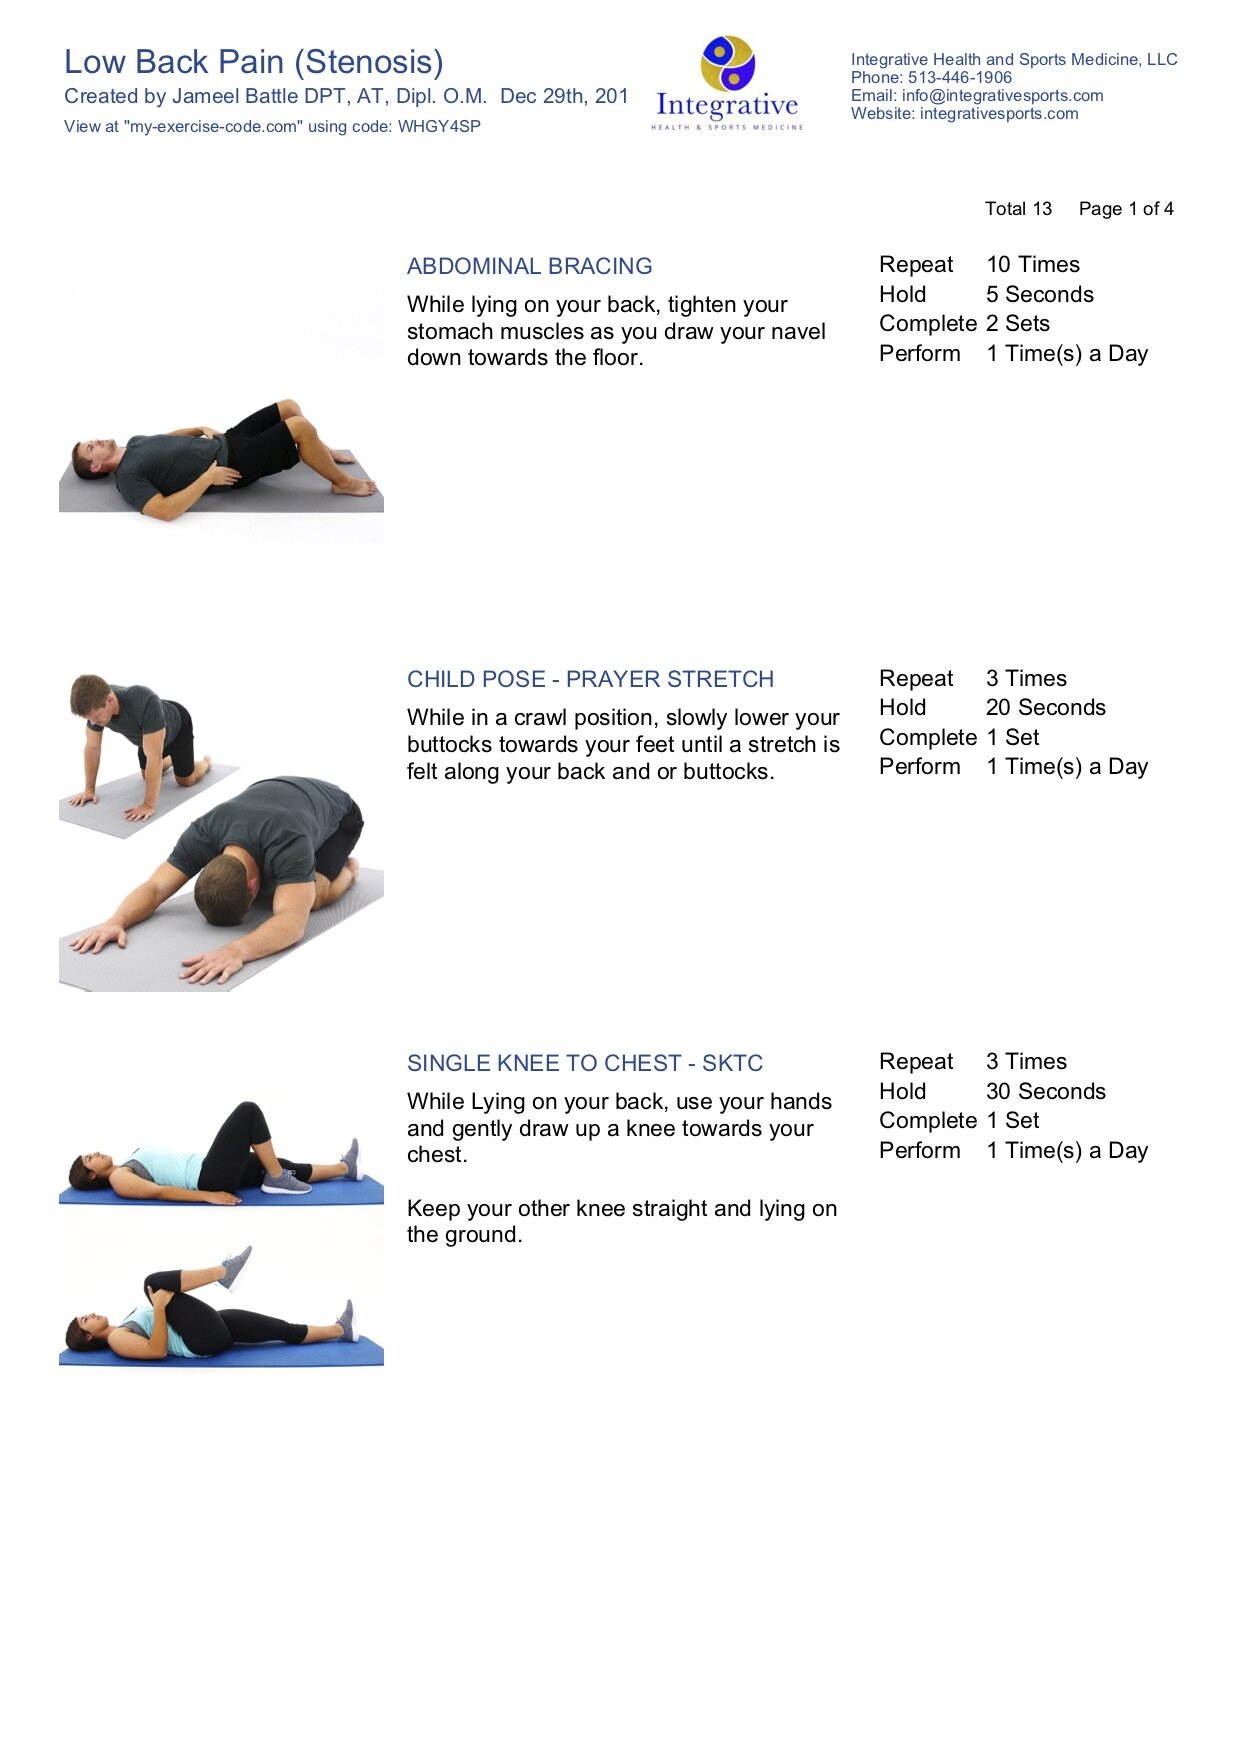 lumbar spine exercises